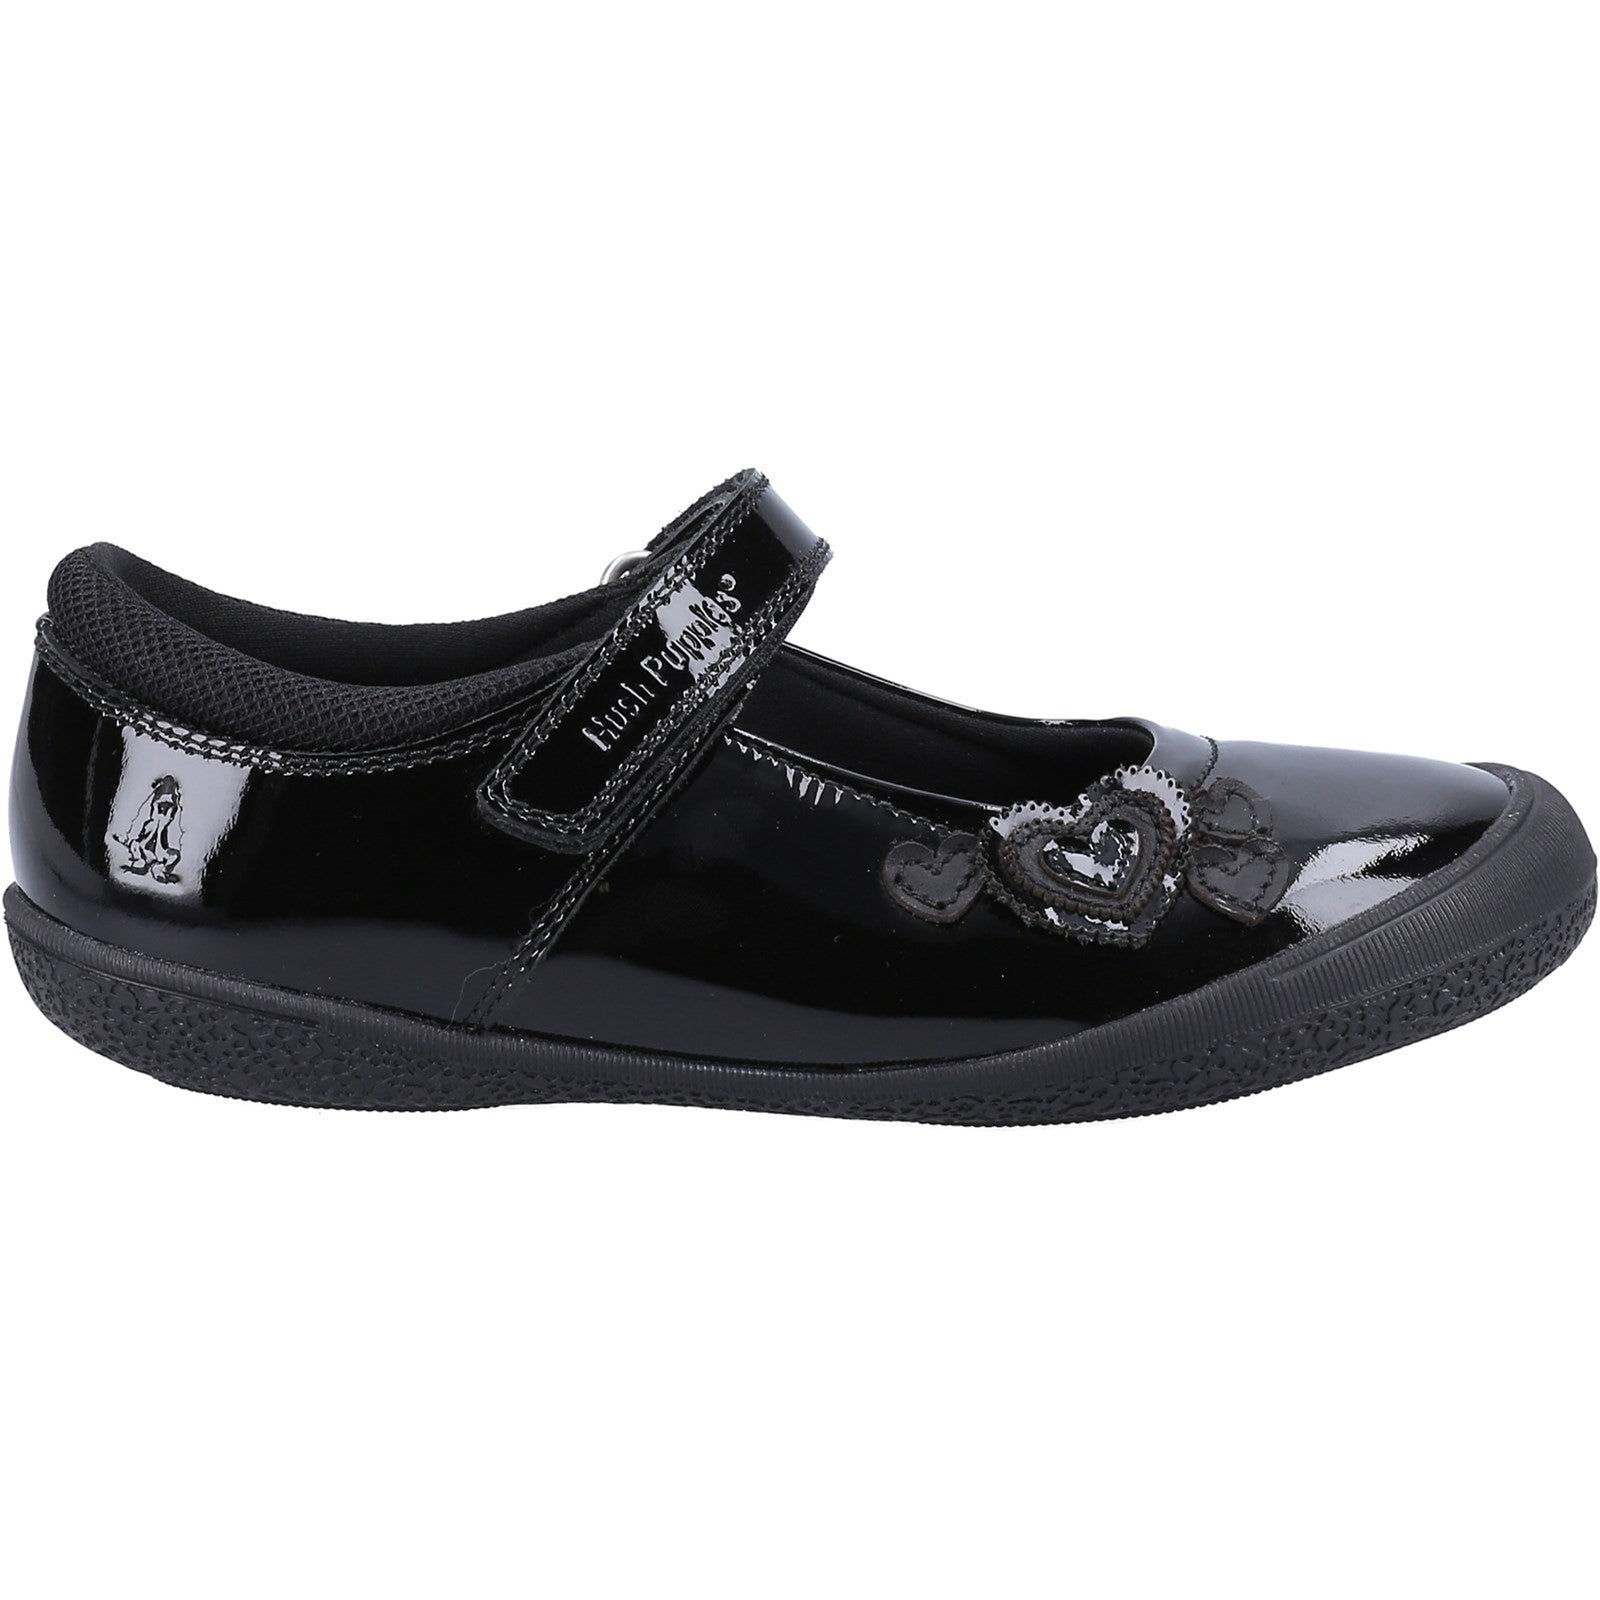 Hush Puppies Infant Girls Rosanna Patent Leather School Shoes - Black